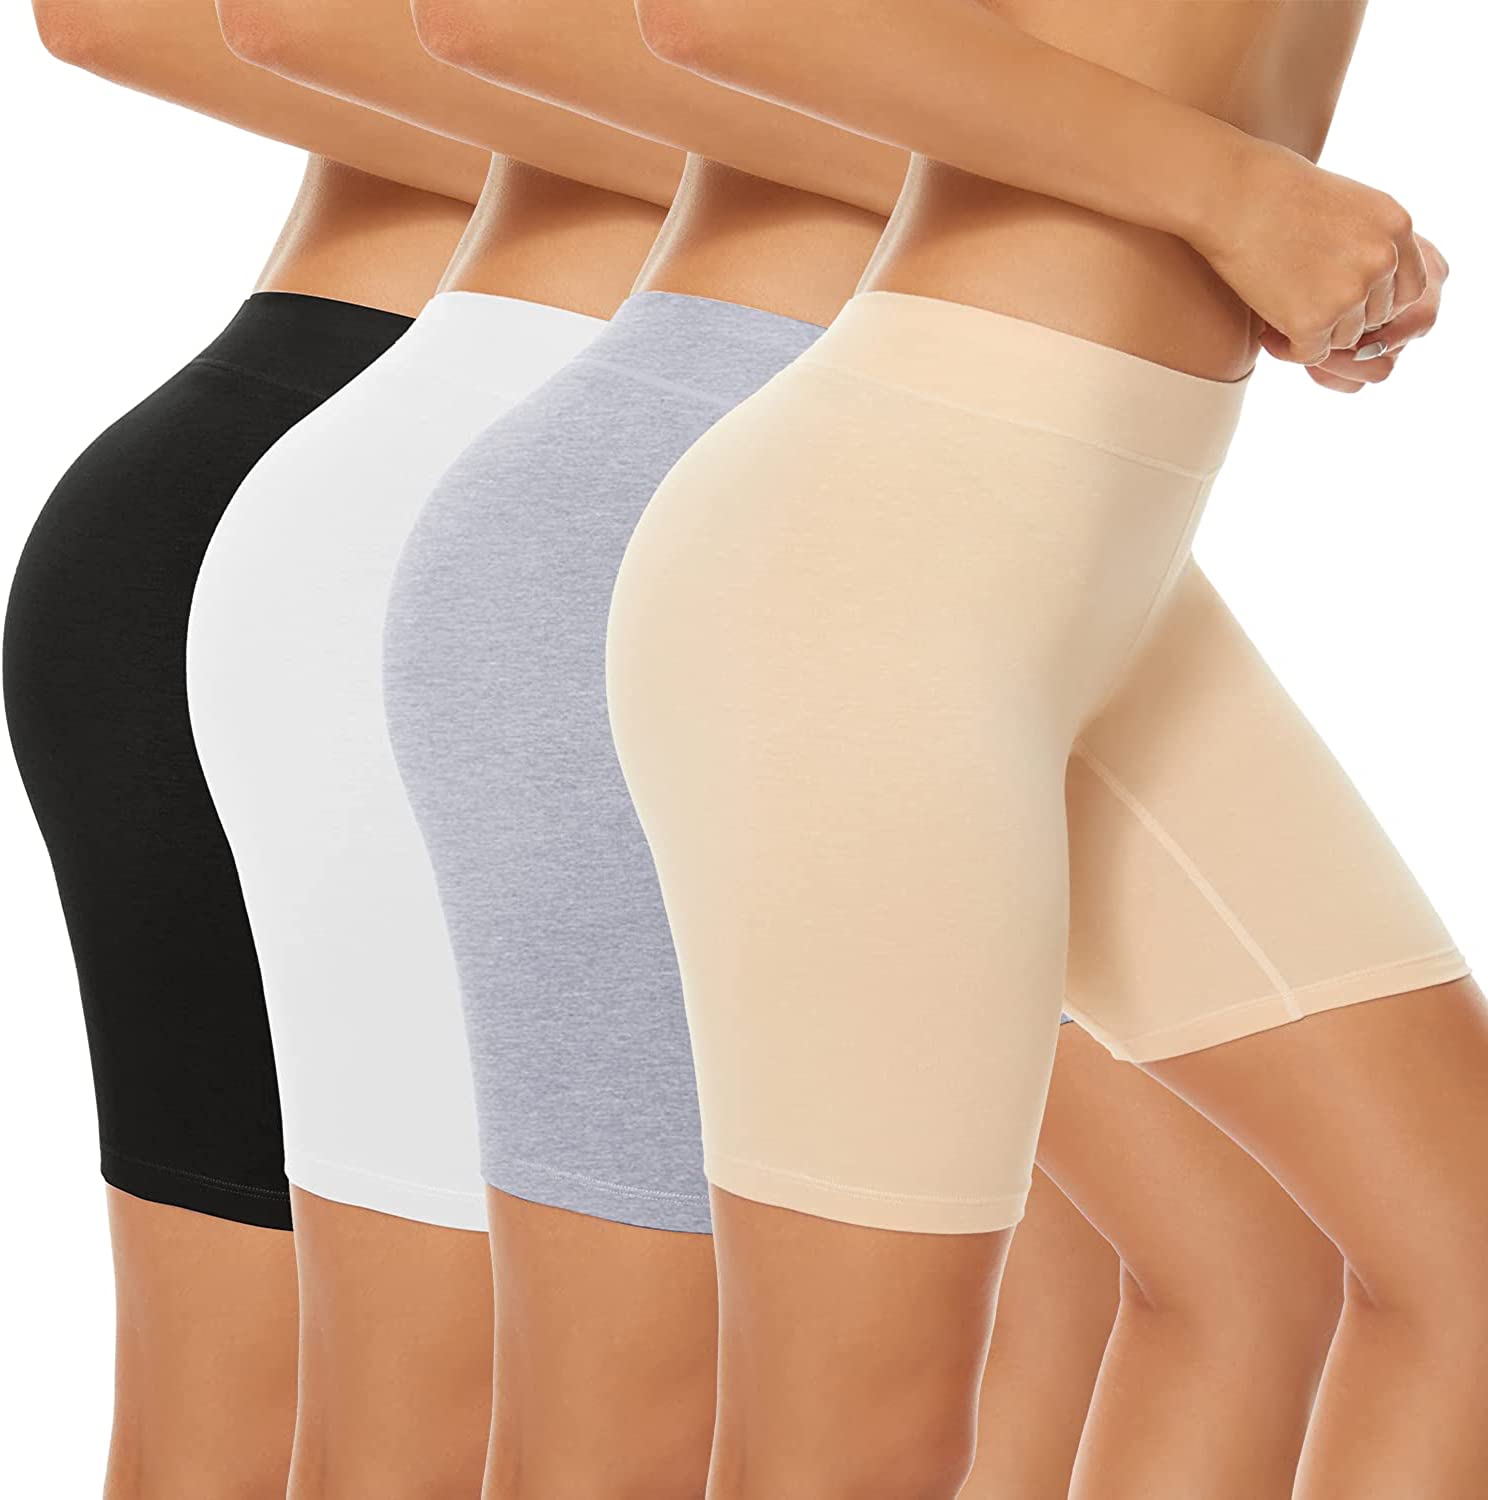  POKARLA 4 Pack Womens Cotton Underwear Boxer Shorts